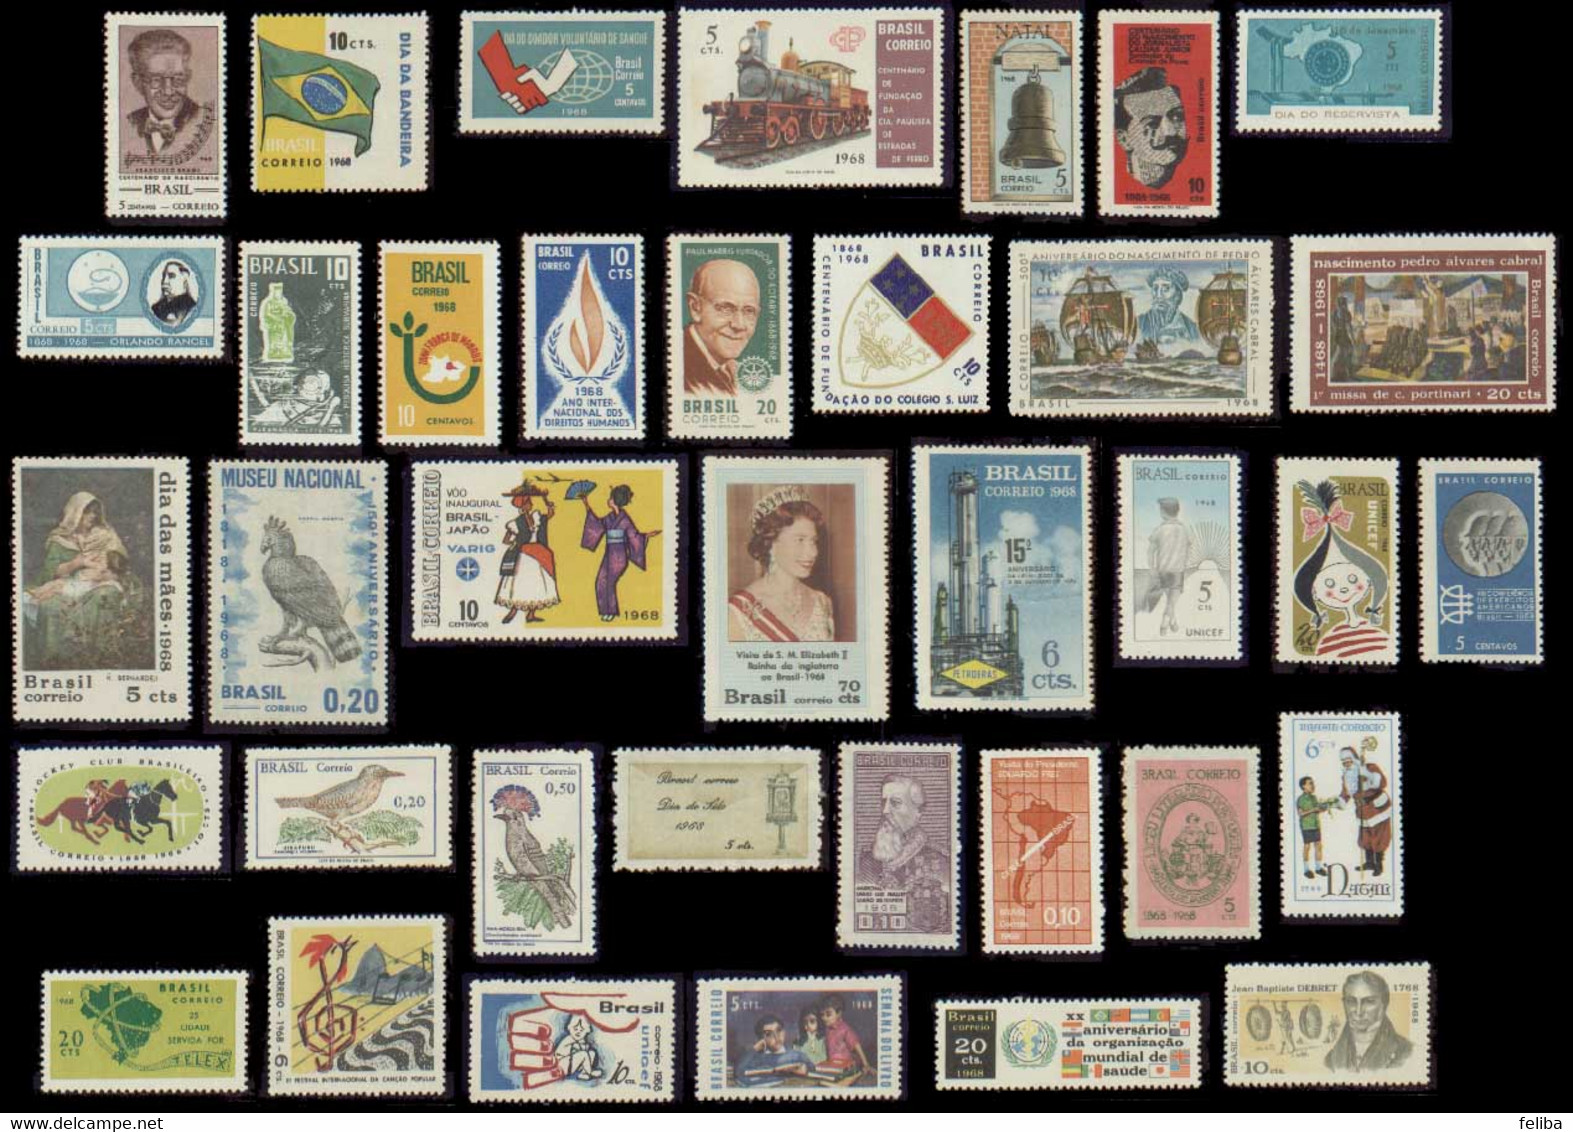 Brazil 1968 Unused Commemorative Stamps - Full Years